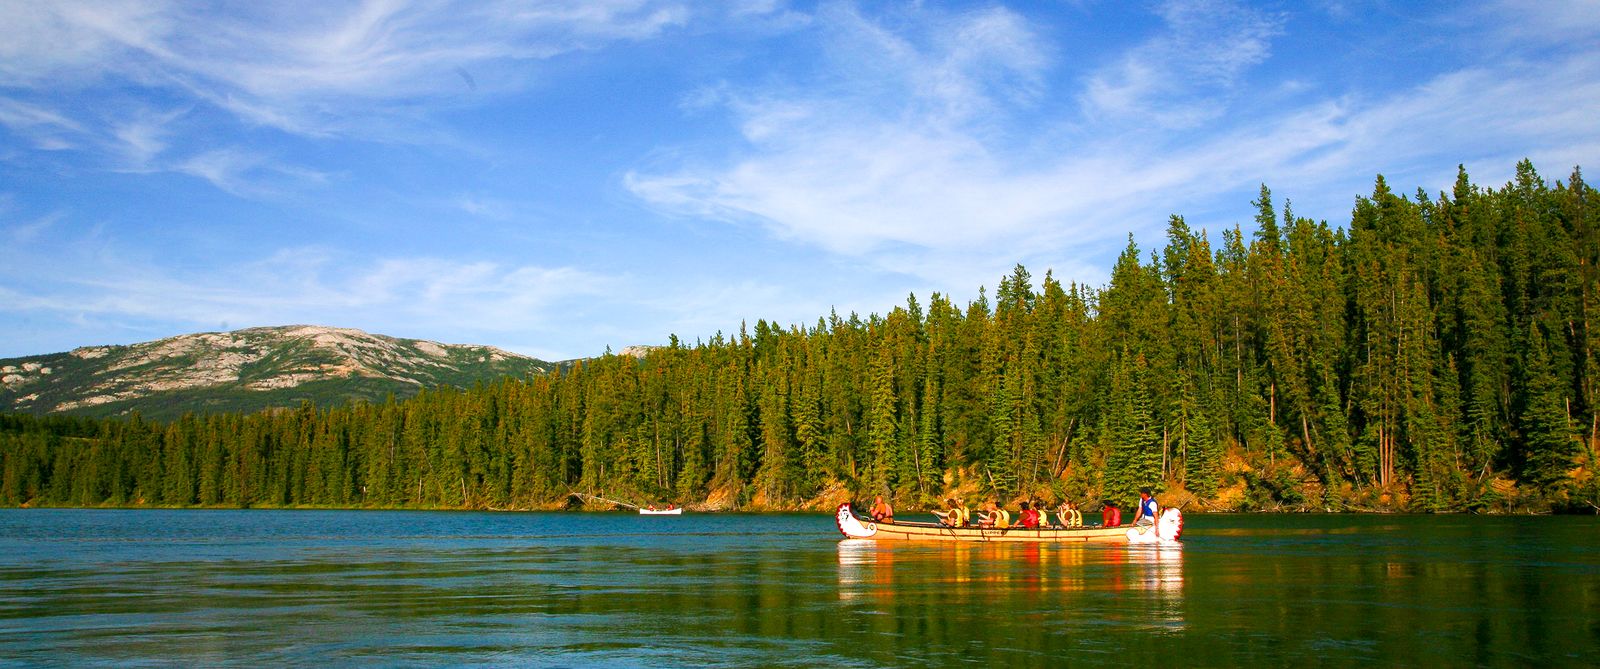 Kanu auf Yukon River in Yukon, Canada